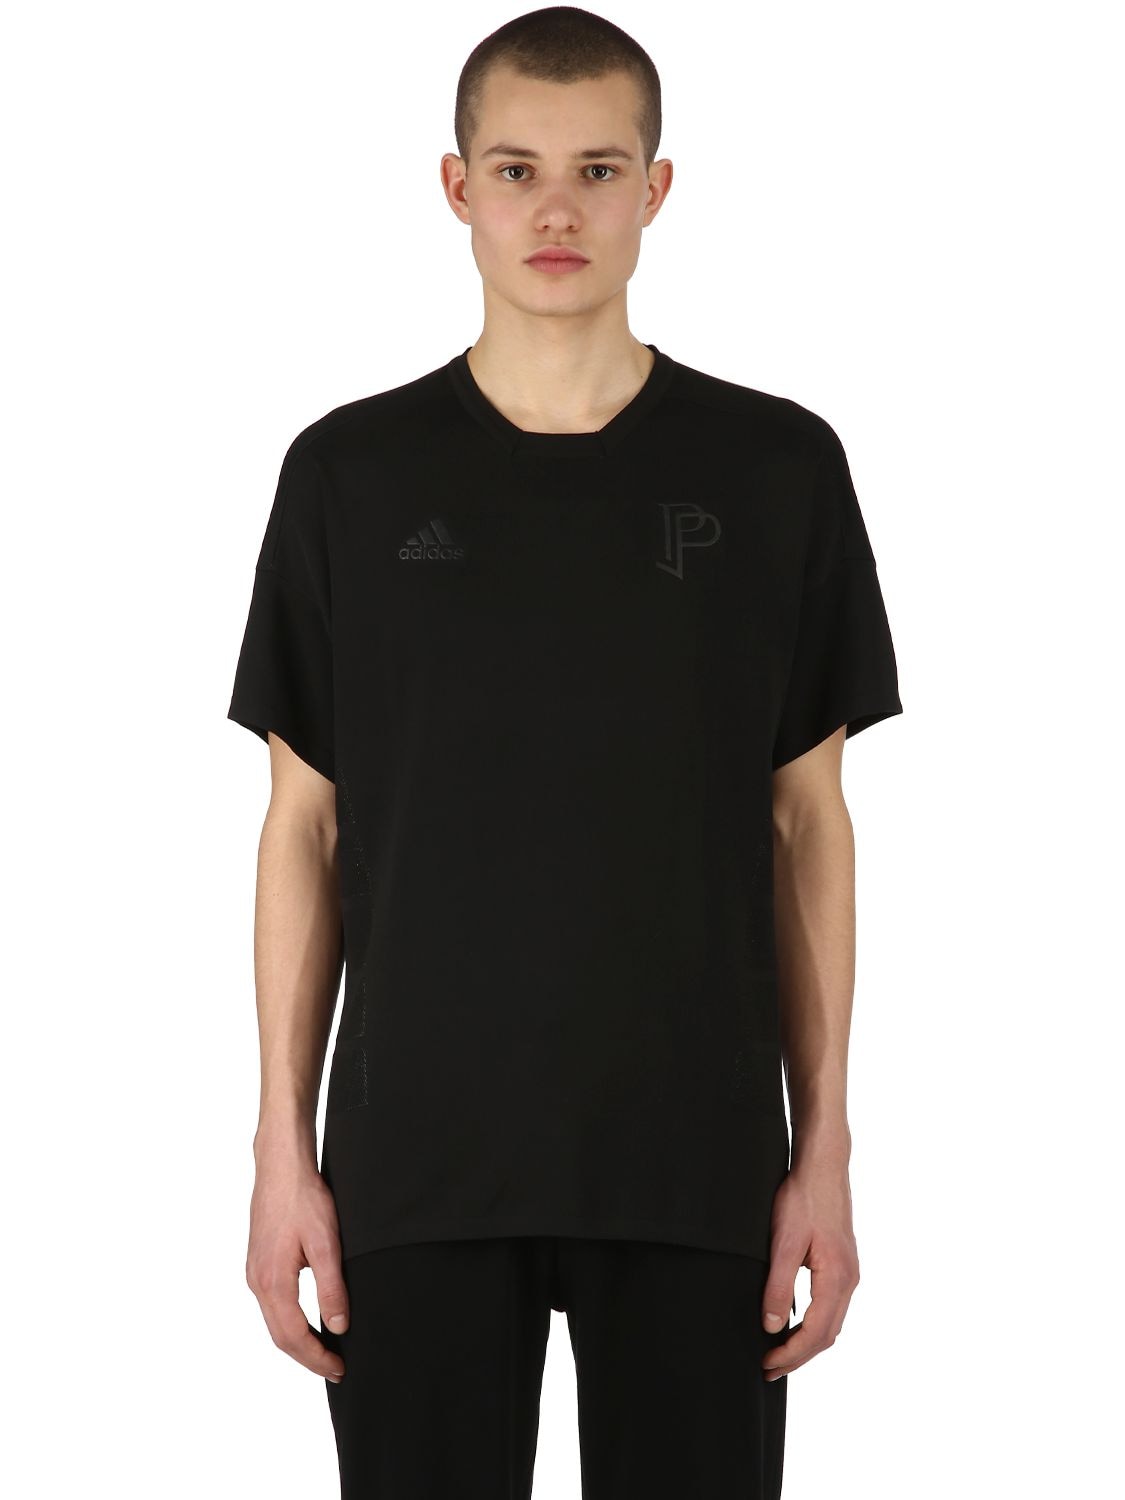 Adidas X Paul Pogba Paul Pogba Jersey T-shirt In Black